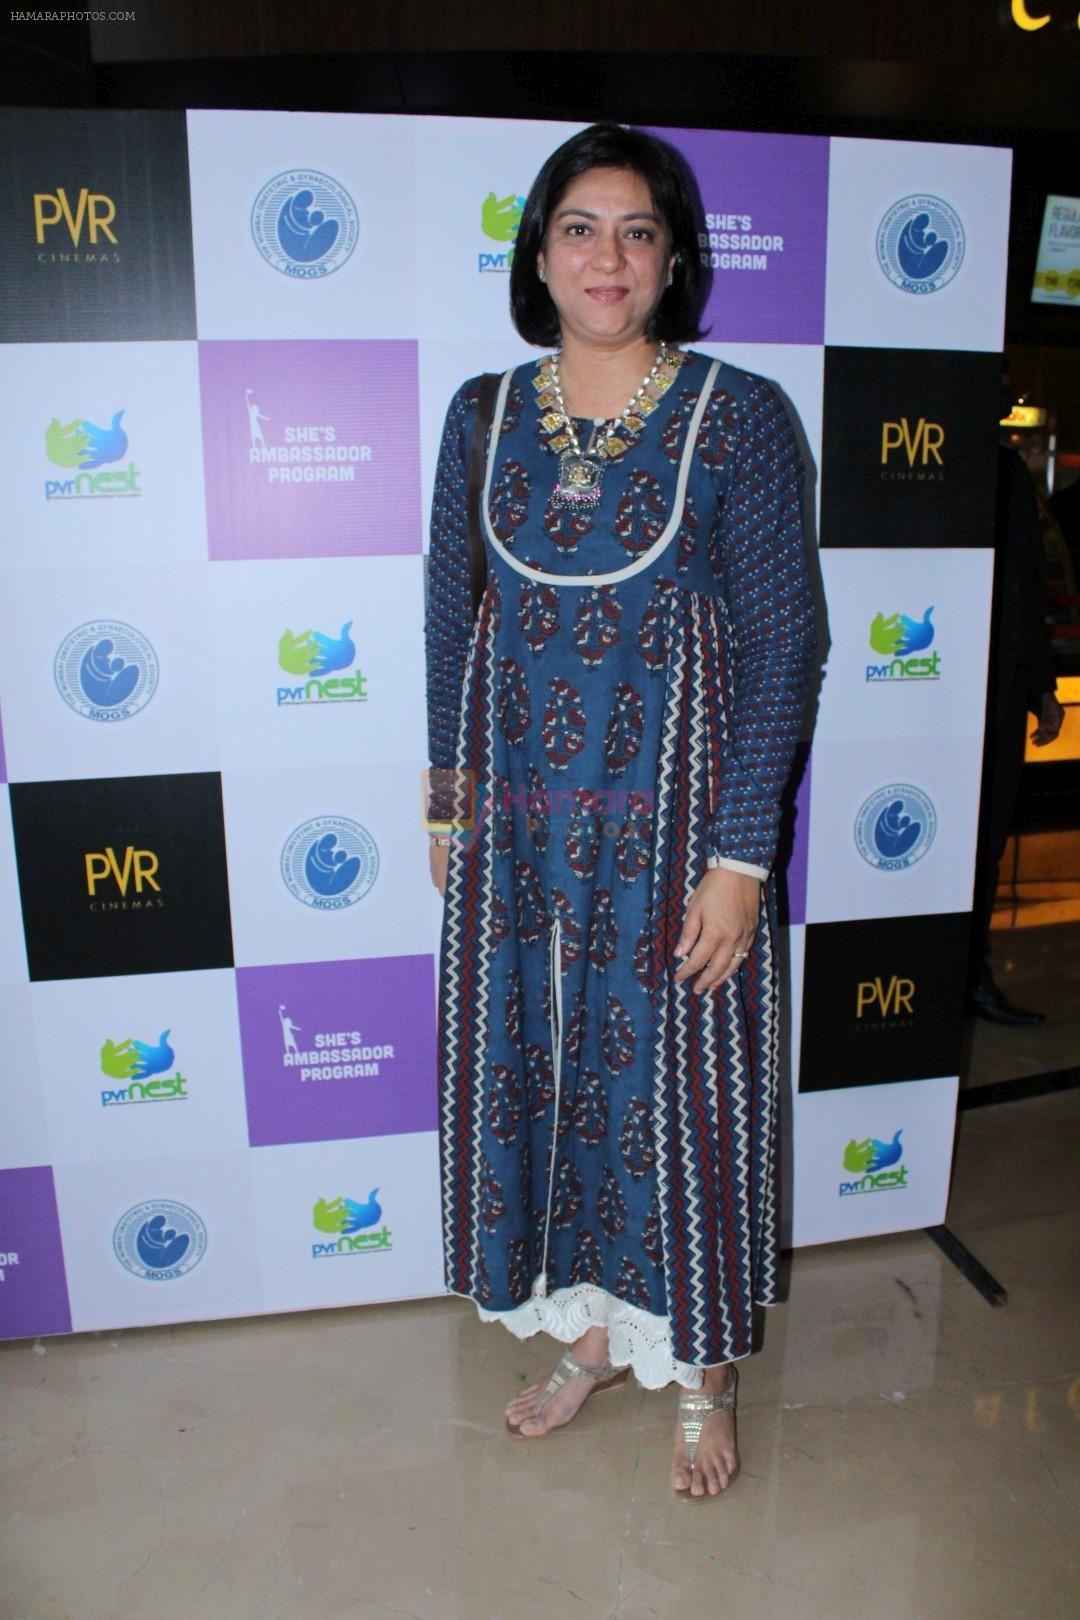 Priya Dutt at the Launch Of New Initiative She's Ambassador Program